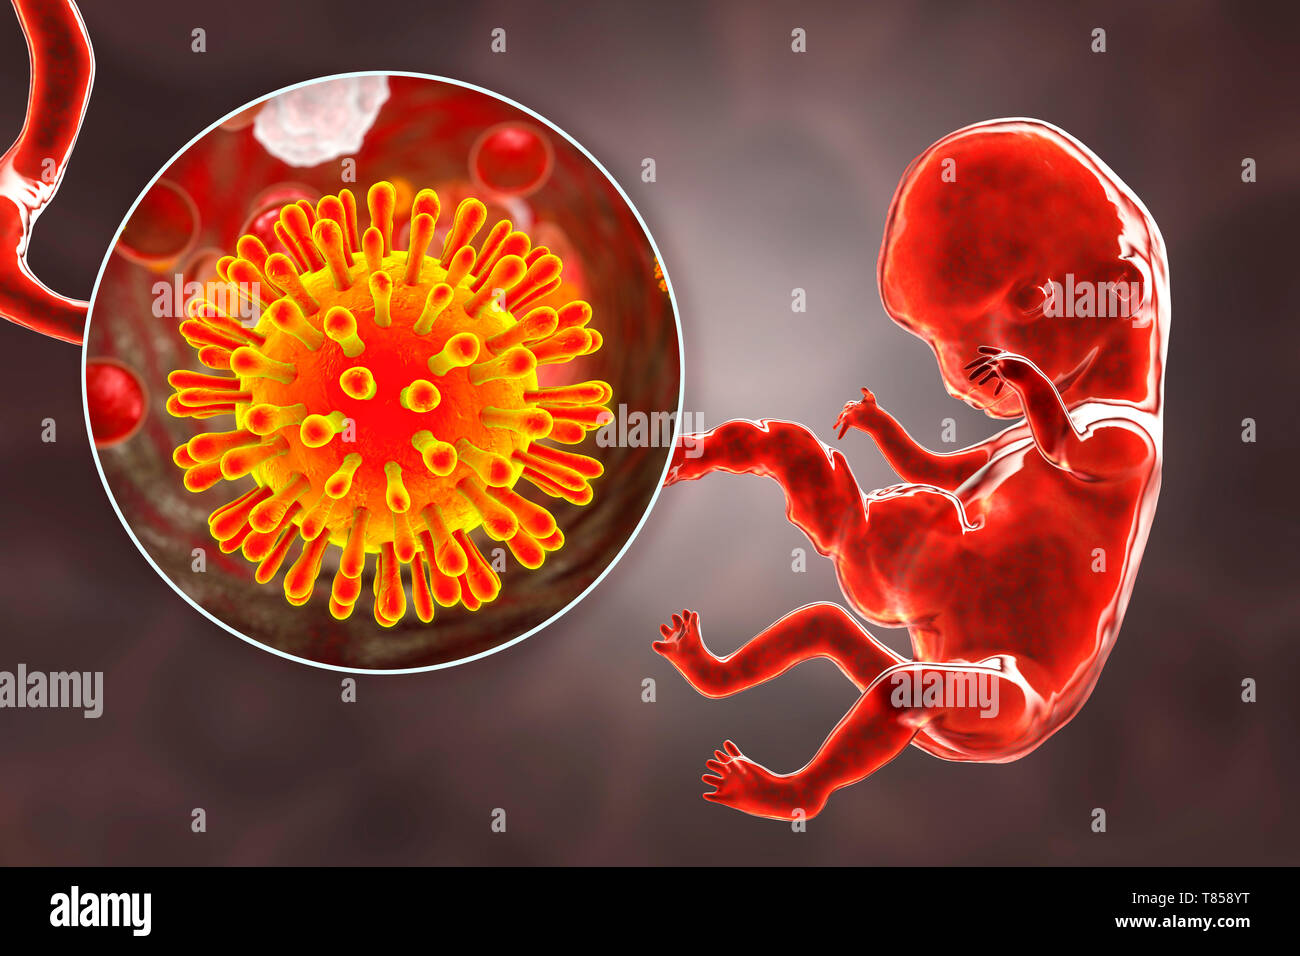 HIV infecting human embryo, illustration Stock Photo